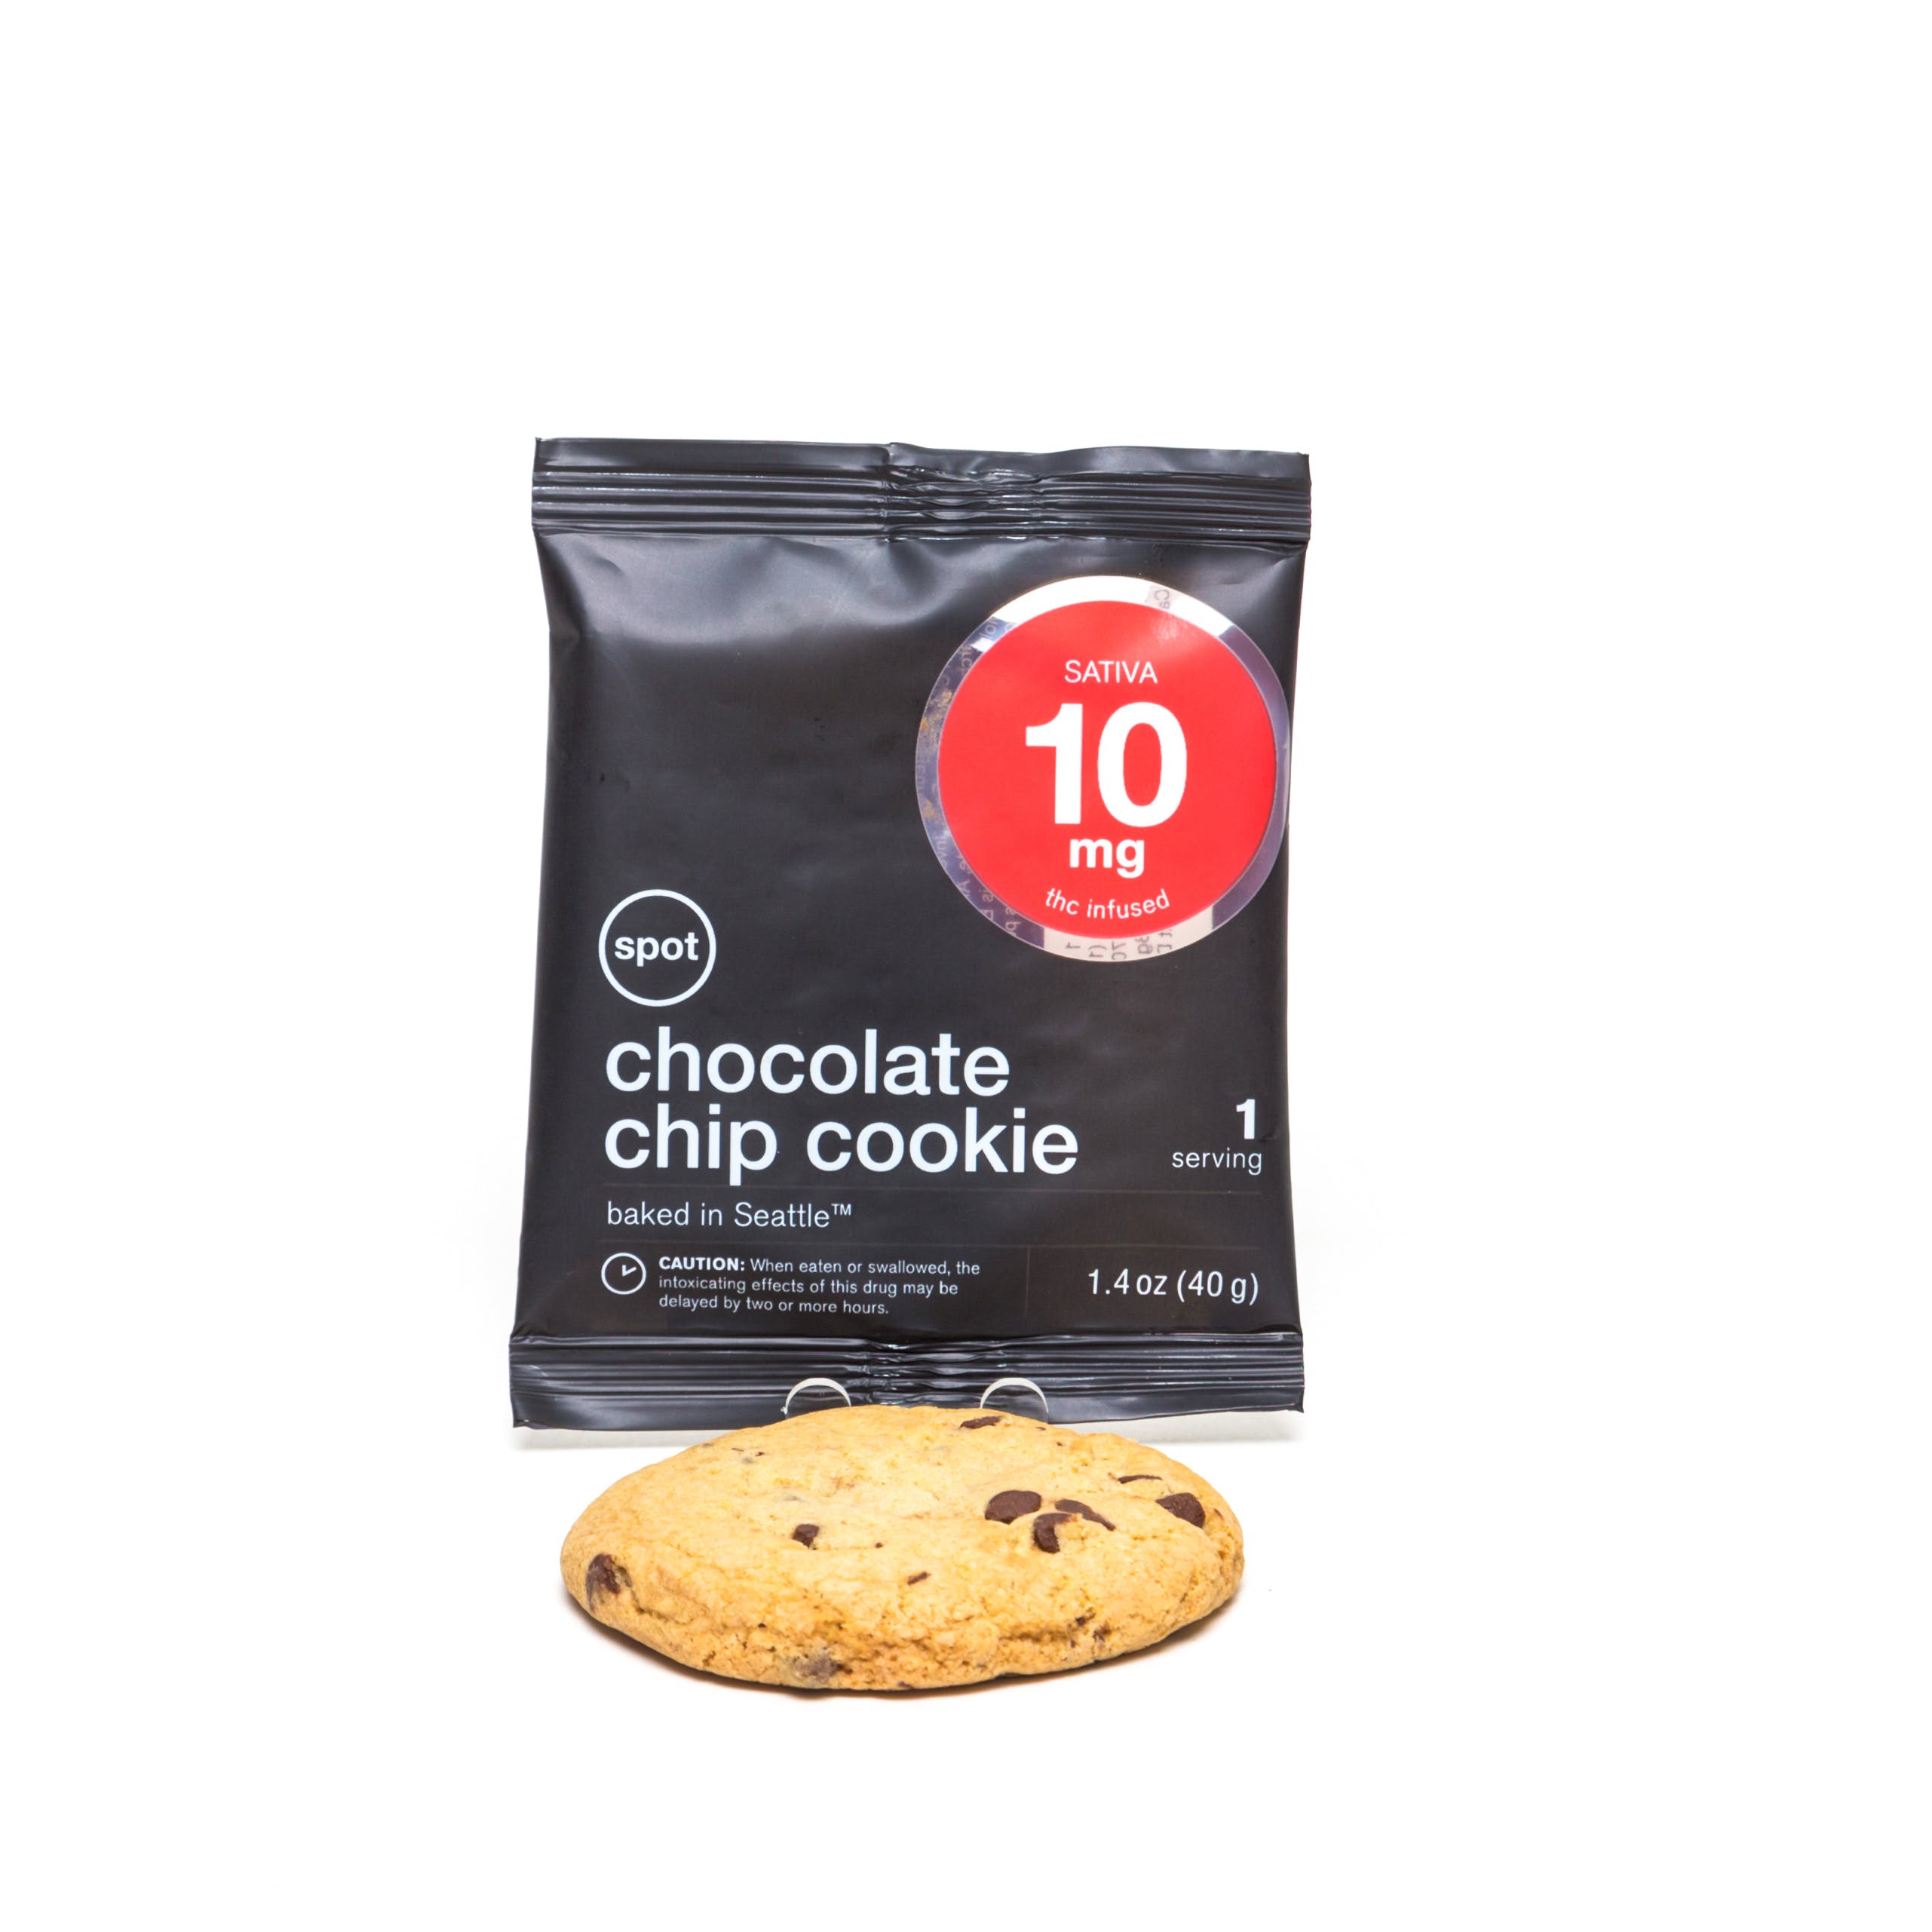 Sativa single serve Chocolate chip Cookie (Botanica Seattle)